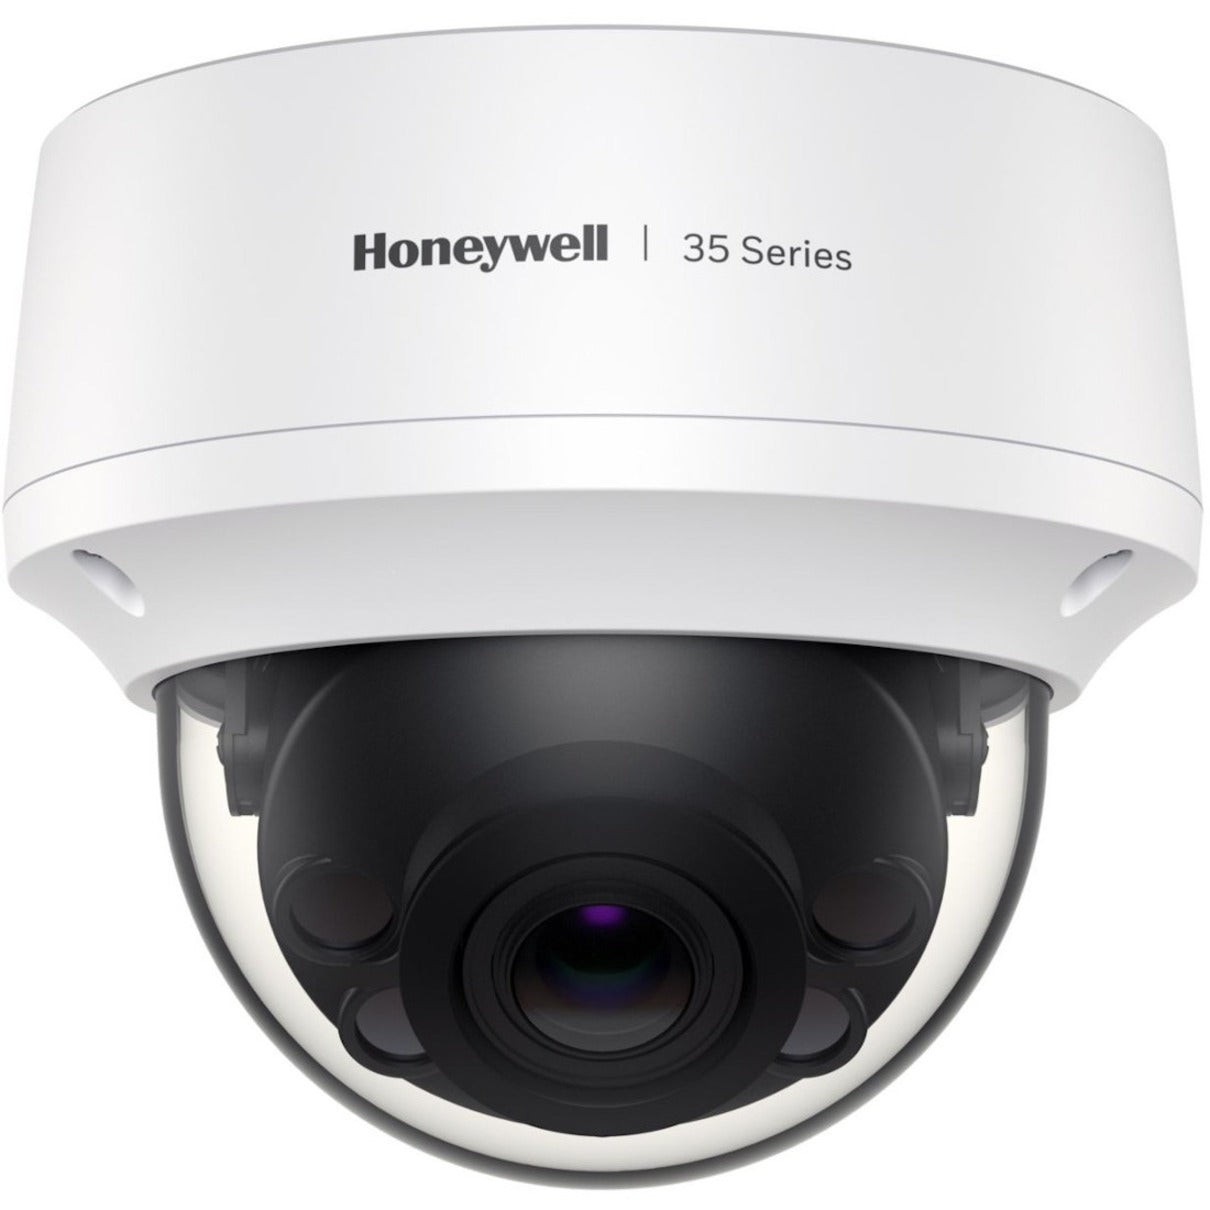 Honeywell HC35W45R2 5 Megapixel Network Camera, Color Mini Dome